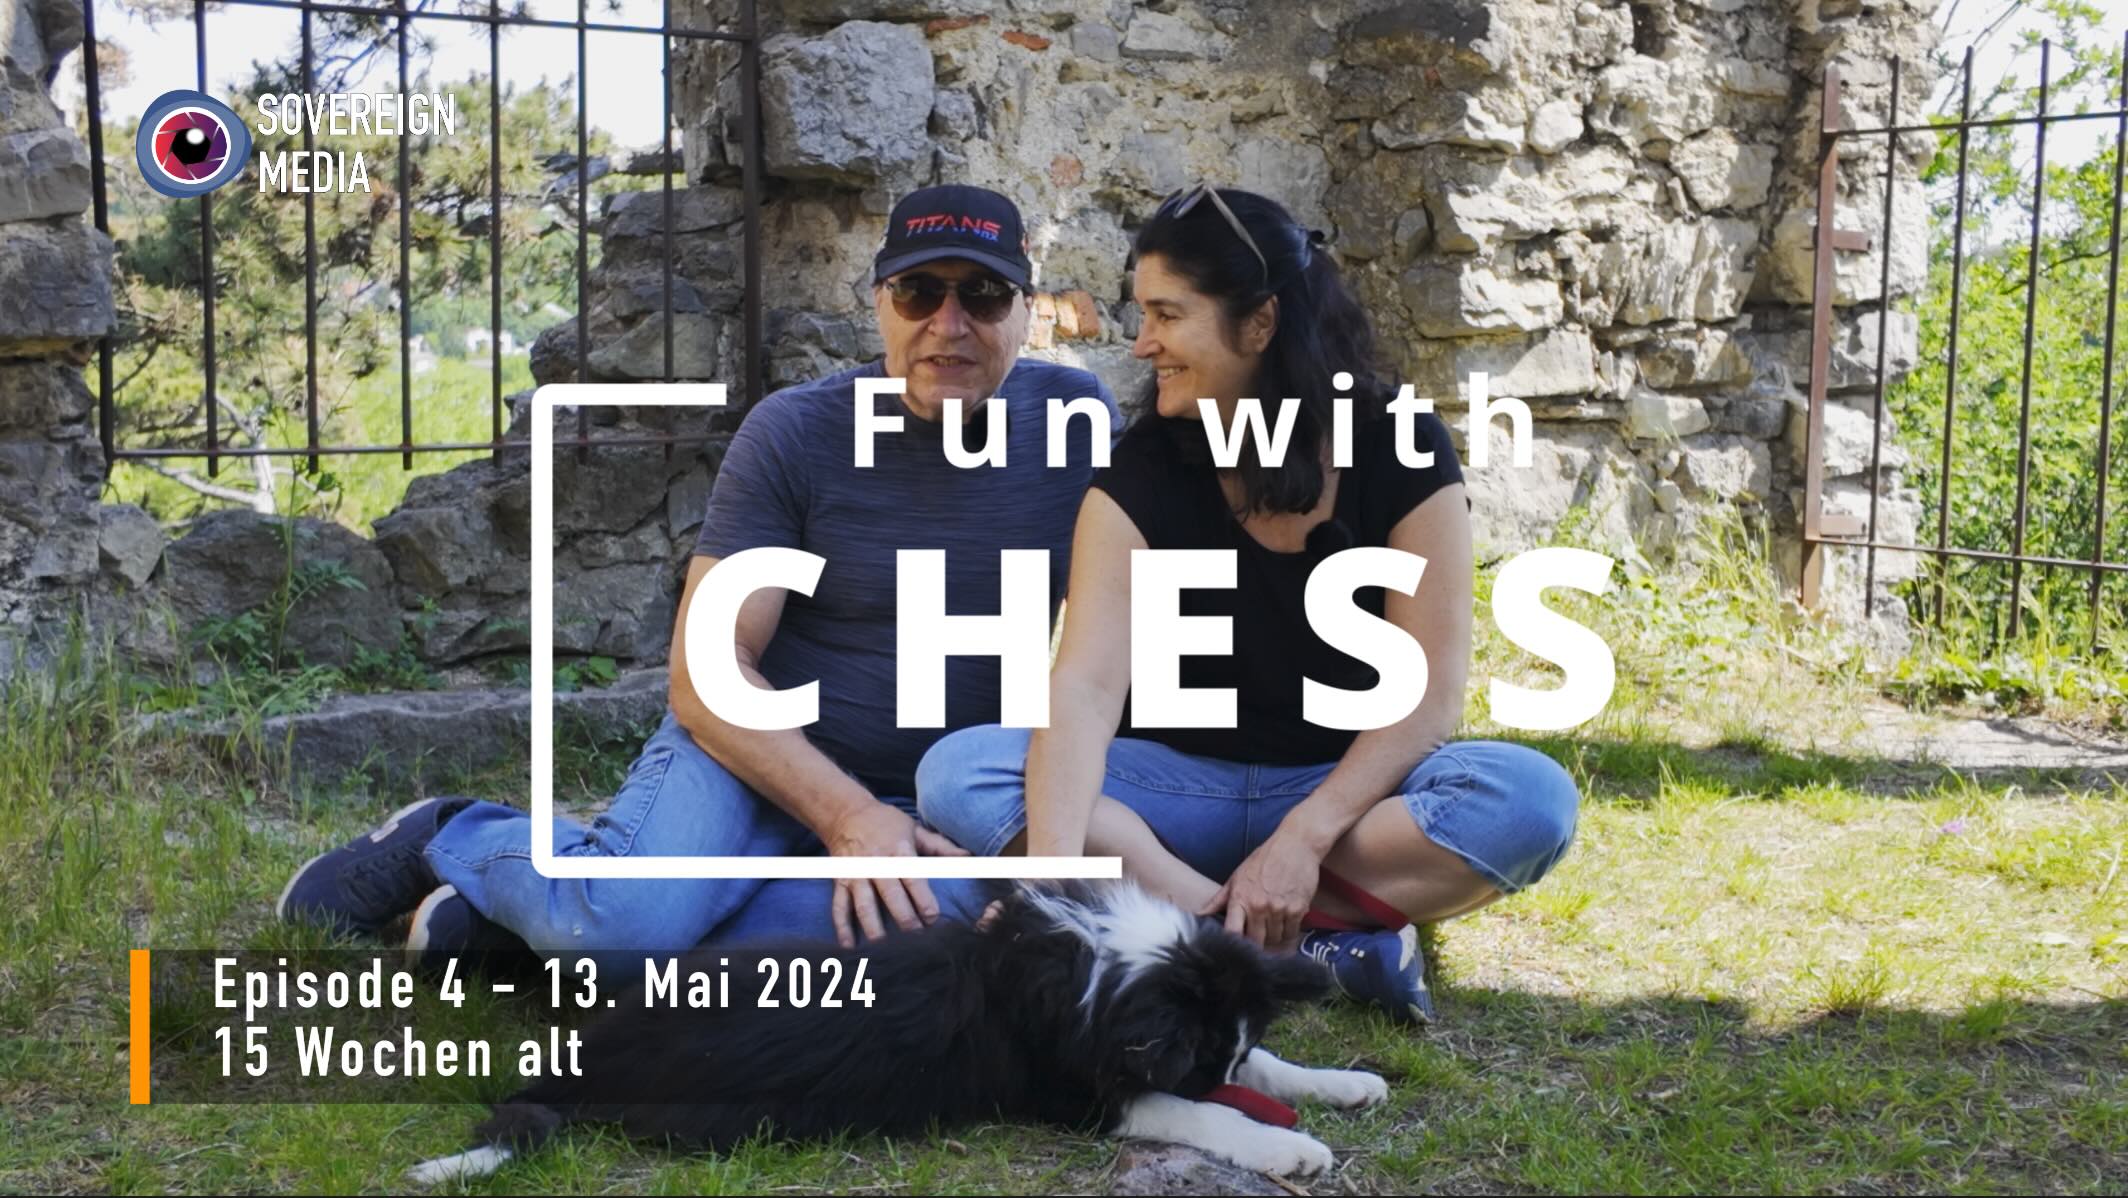 Fun with Chess Episode 4 – 13. Mai 2024